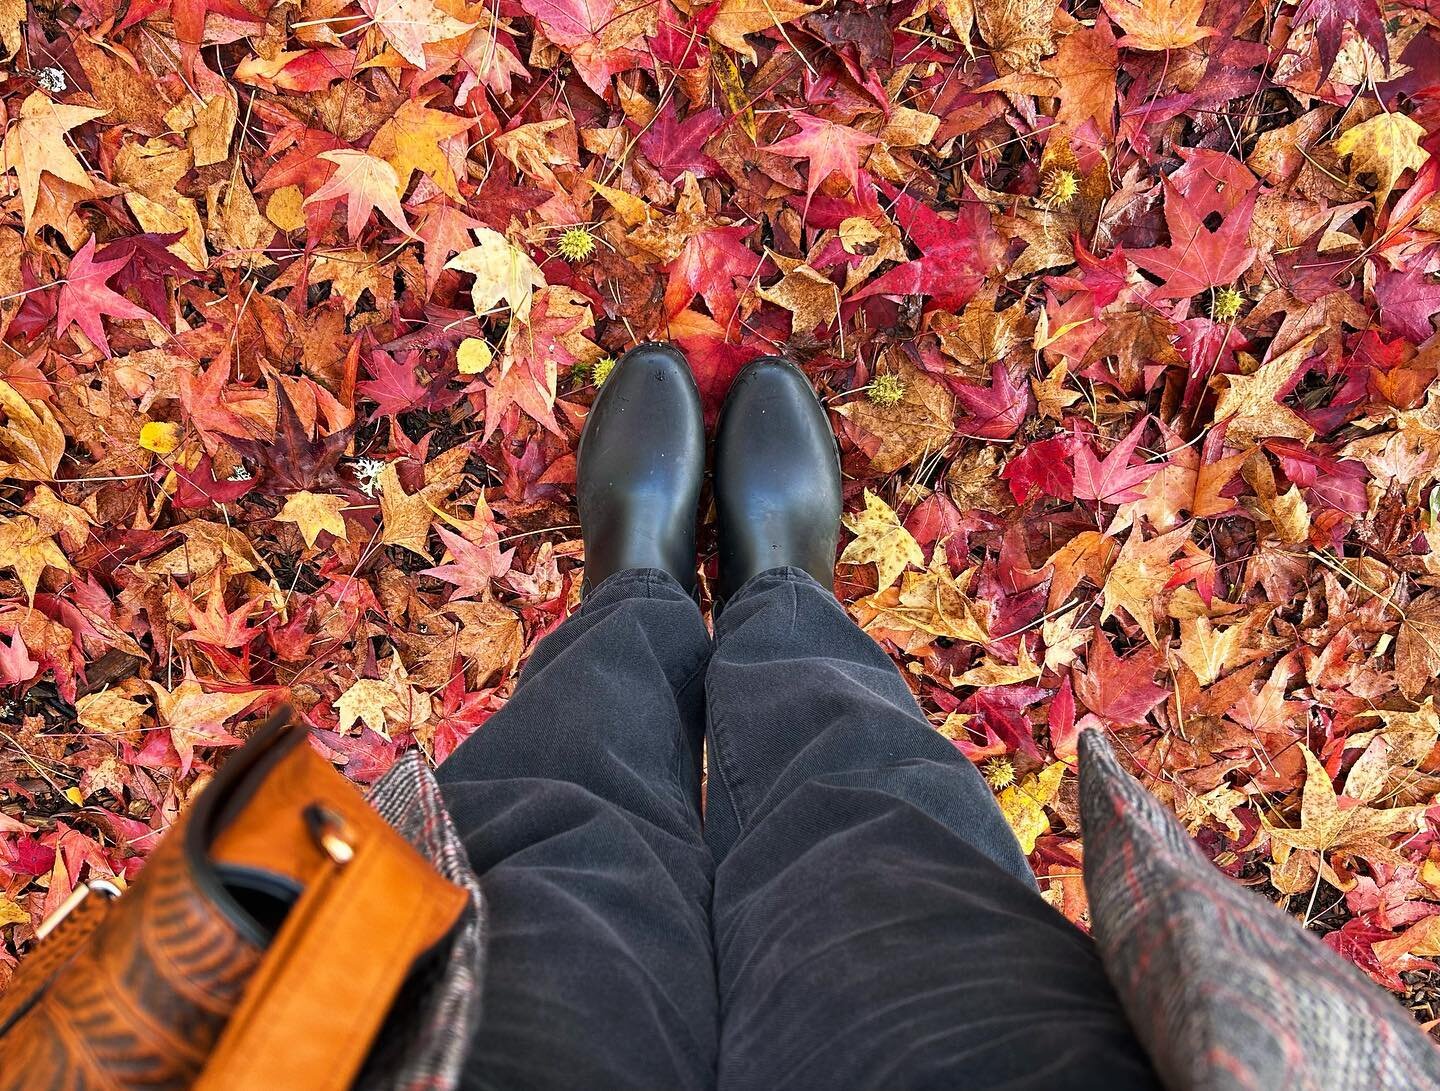 Obligatory fall girl photo 🍁🍂

#theflourishinghippie #hippie #nature #naturephotography #leaves #leaf #fallingleaves #fall #fallvibes #autumn #autumnvibes #autumnequinox #feet #throwback #vintage